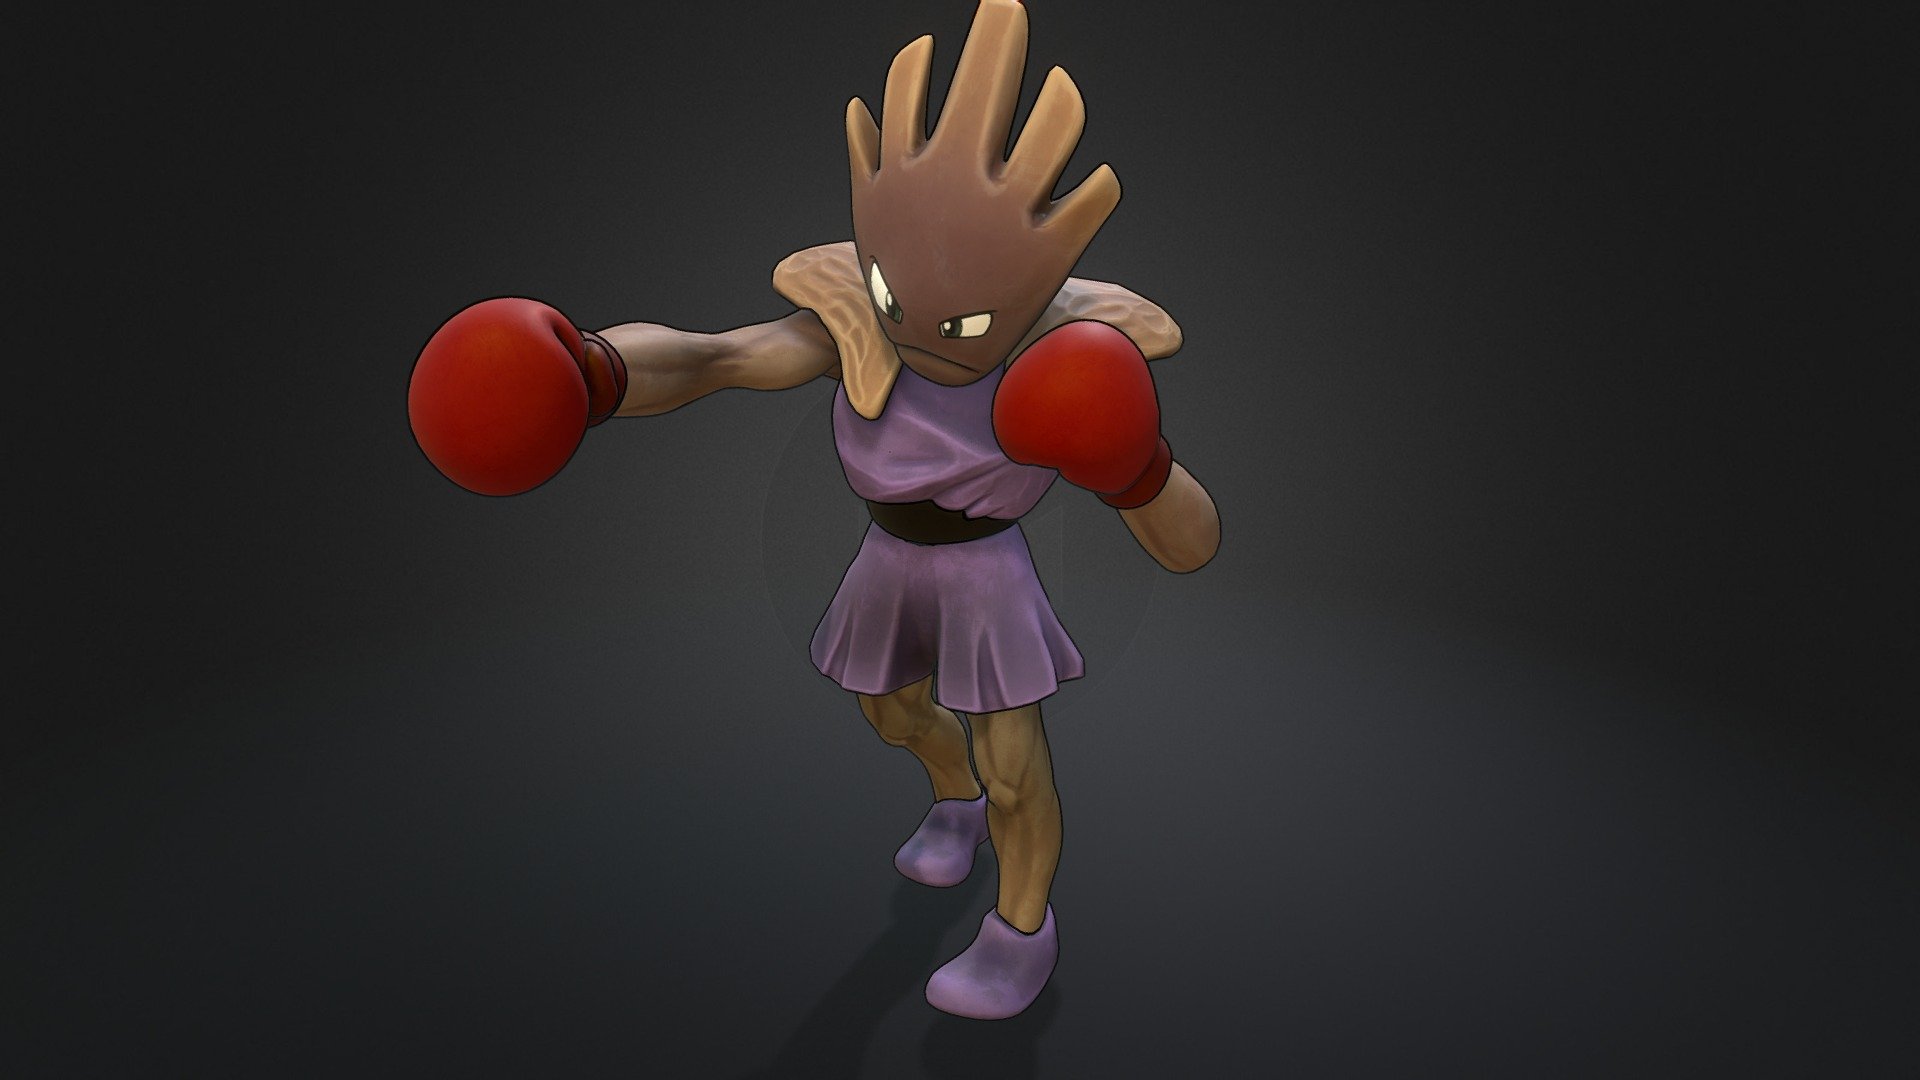 The punching one - Hitmonchan Pokemon - 3D model by 3dlogicus 3d model